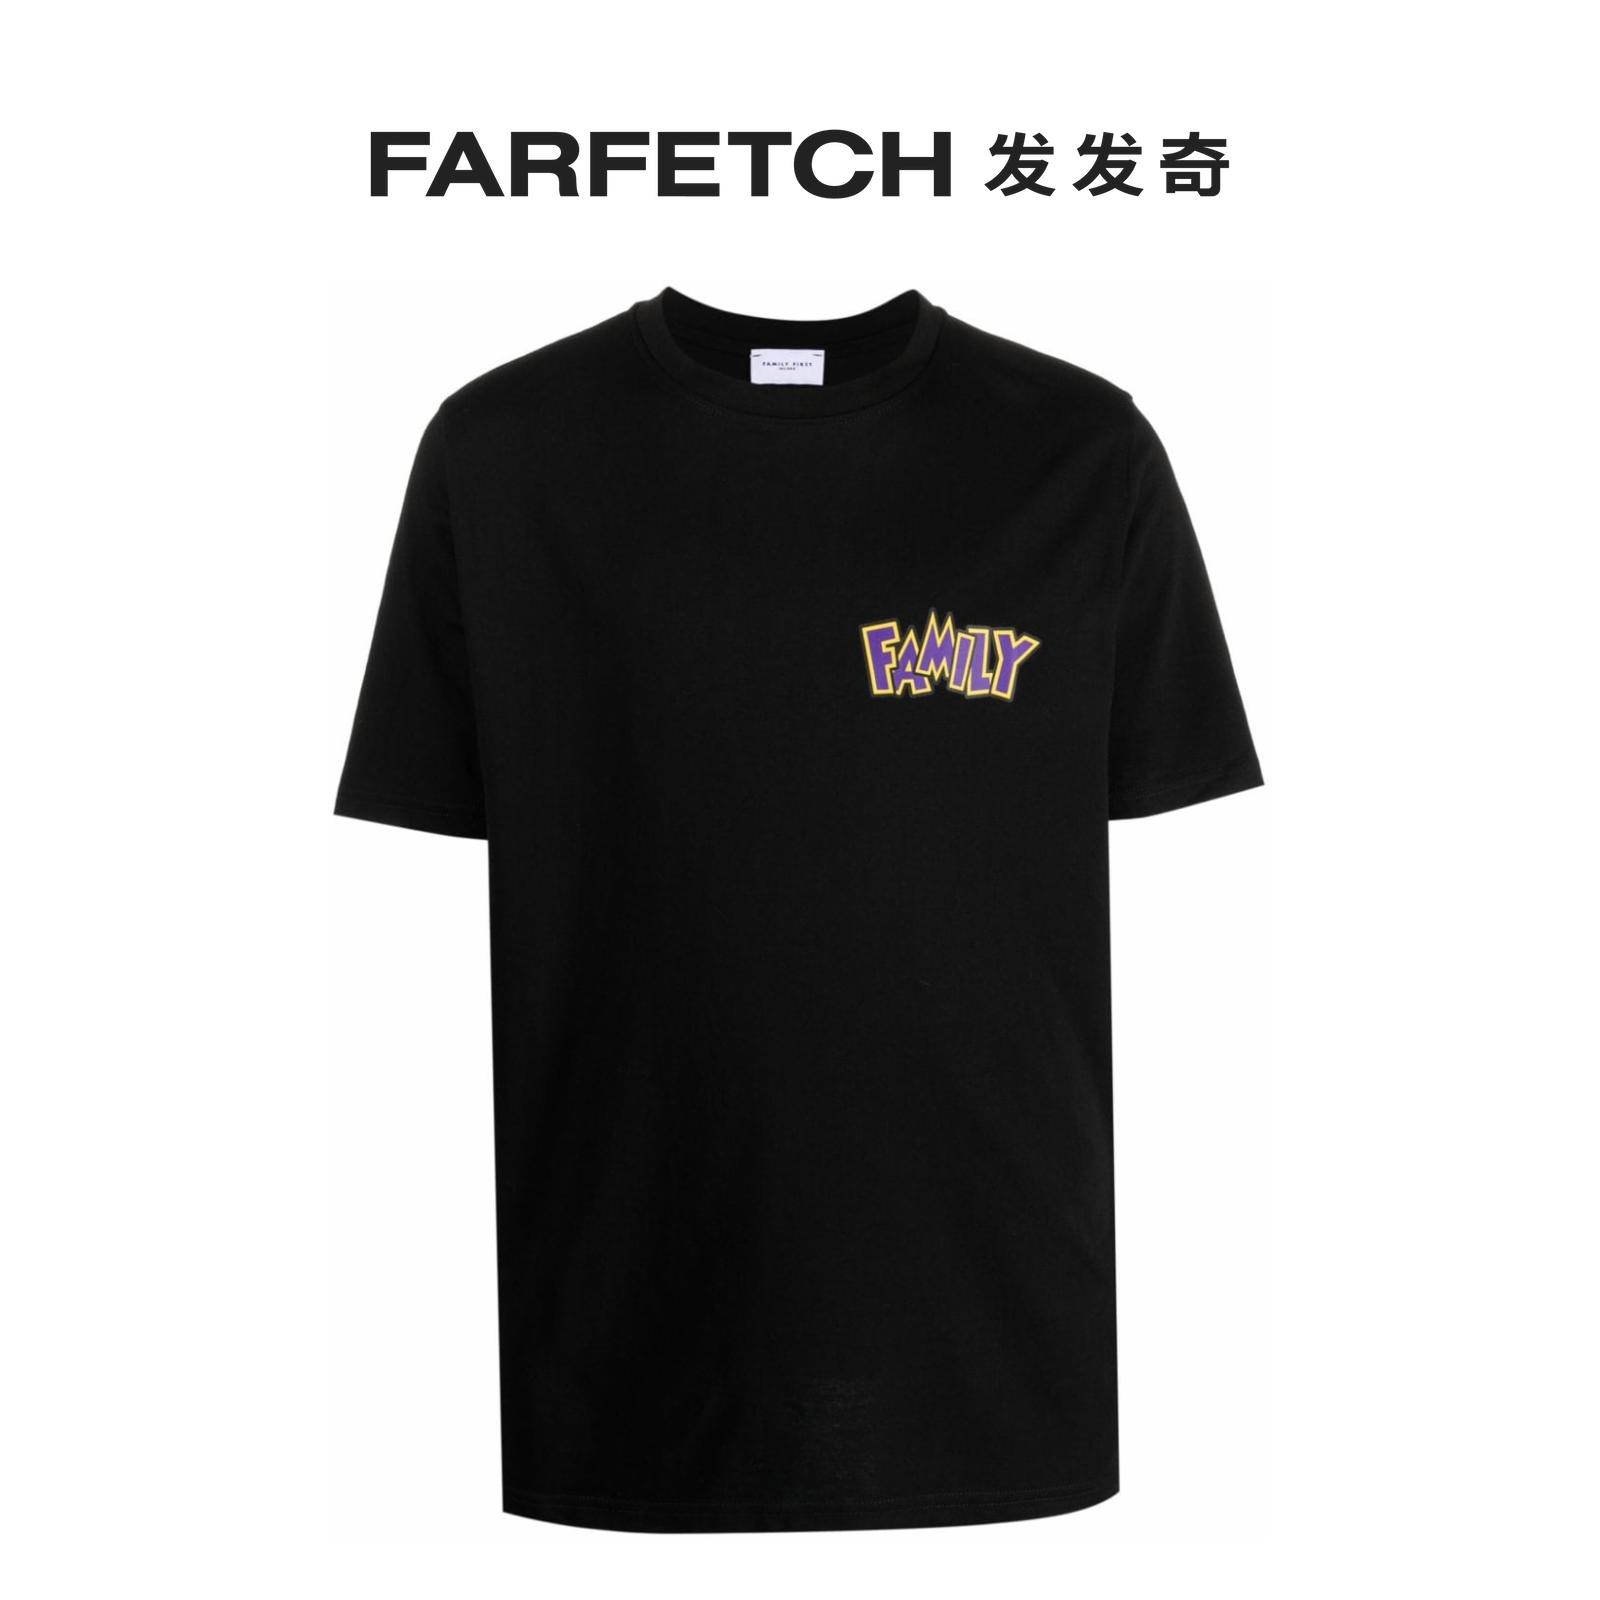 Family First男士x Warner Bros 图案印花T恤FARFETCH发发奇 - 图0